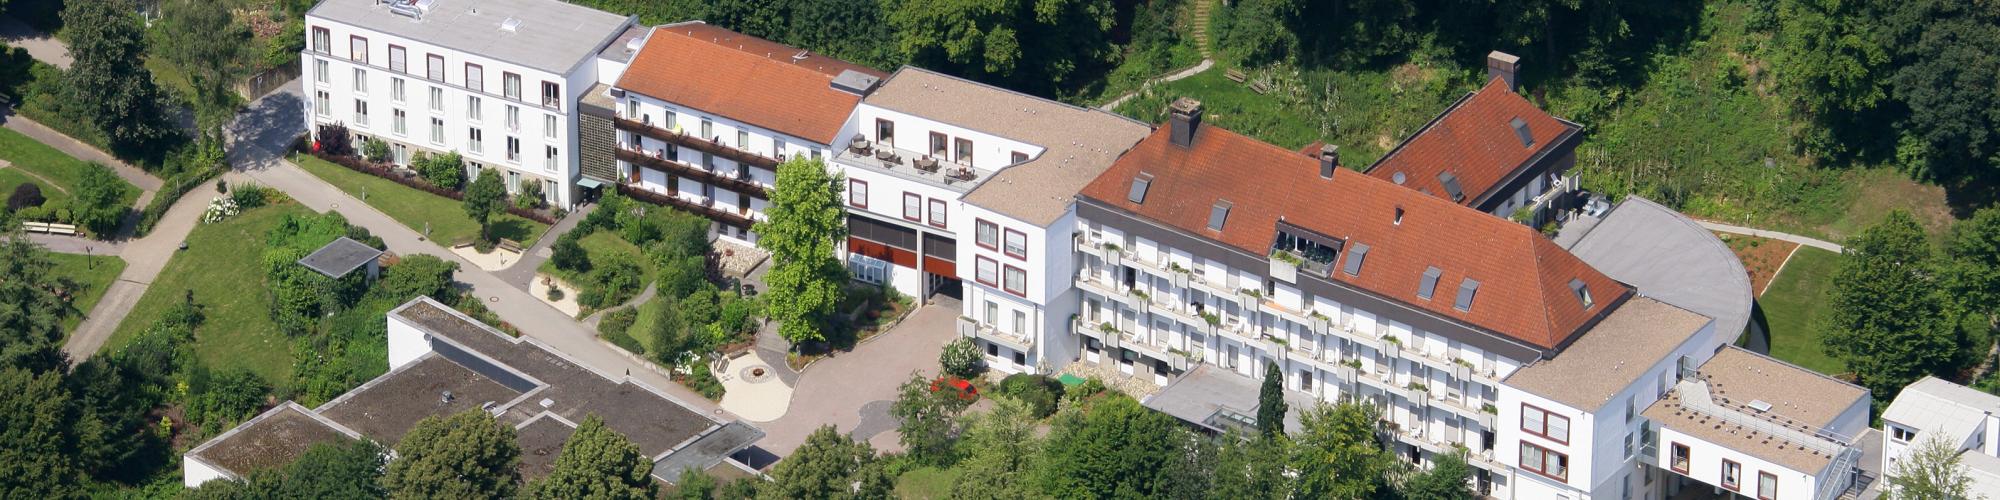 Klinik Tecklenburger Land GmbH & Co. KG